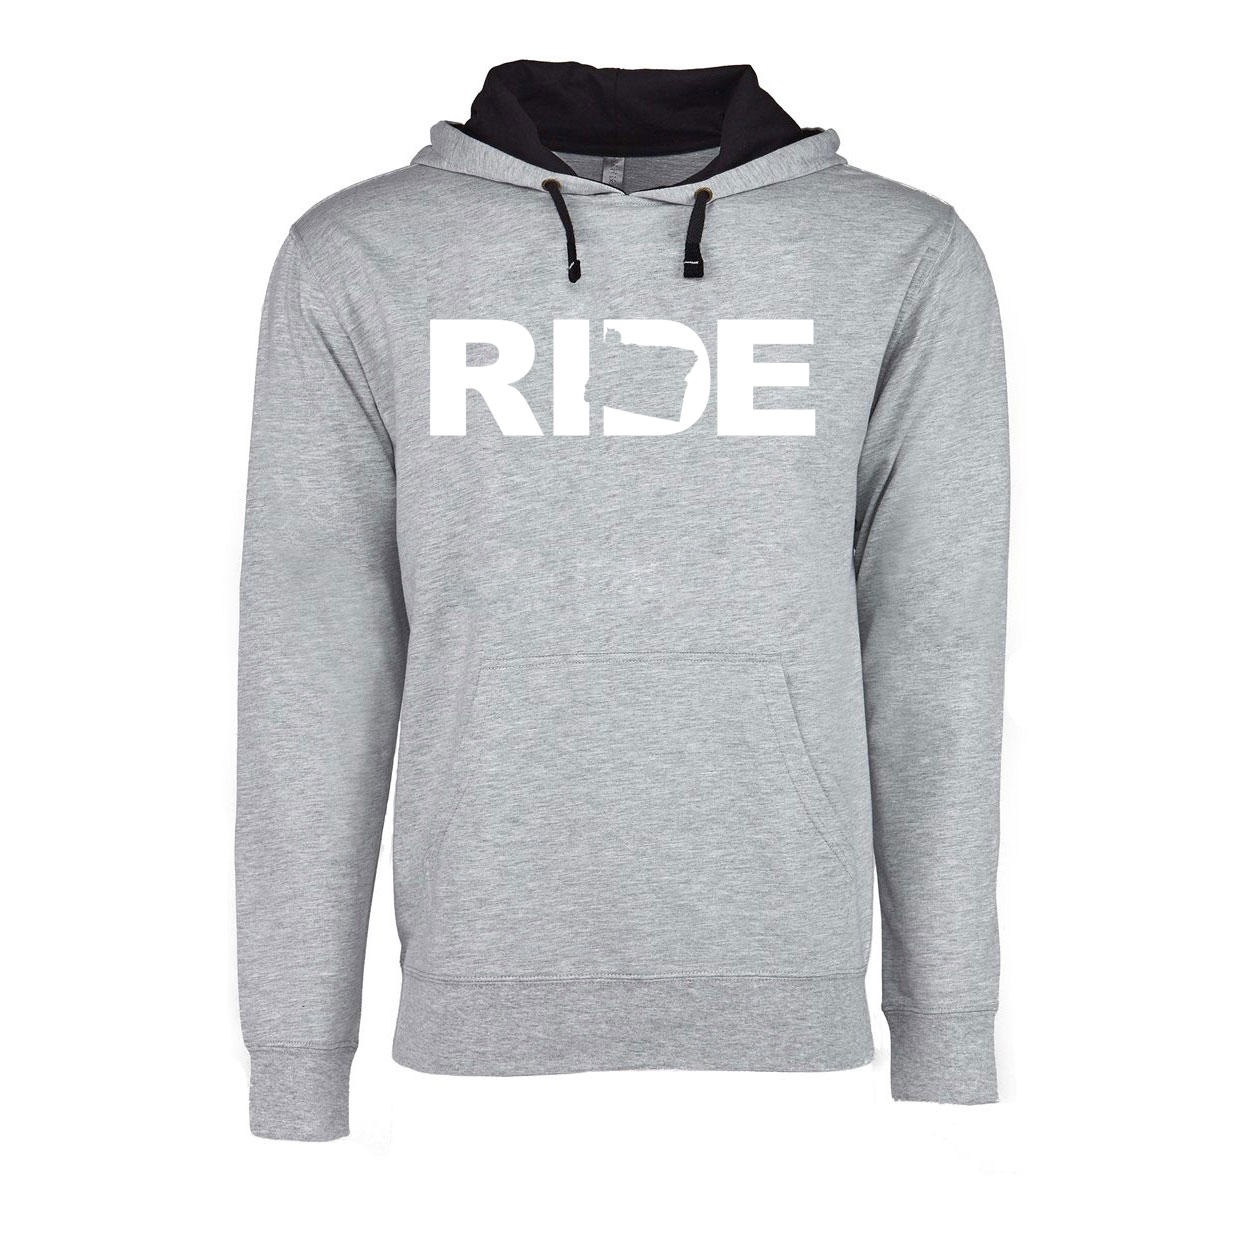 Ride Oregon Classic Lightweight Sweatshirt Heather Gray/Black (White Logo)